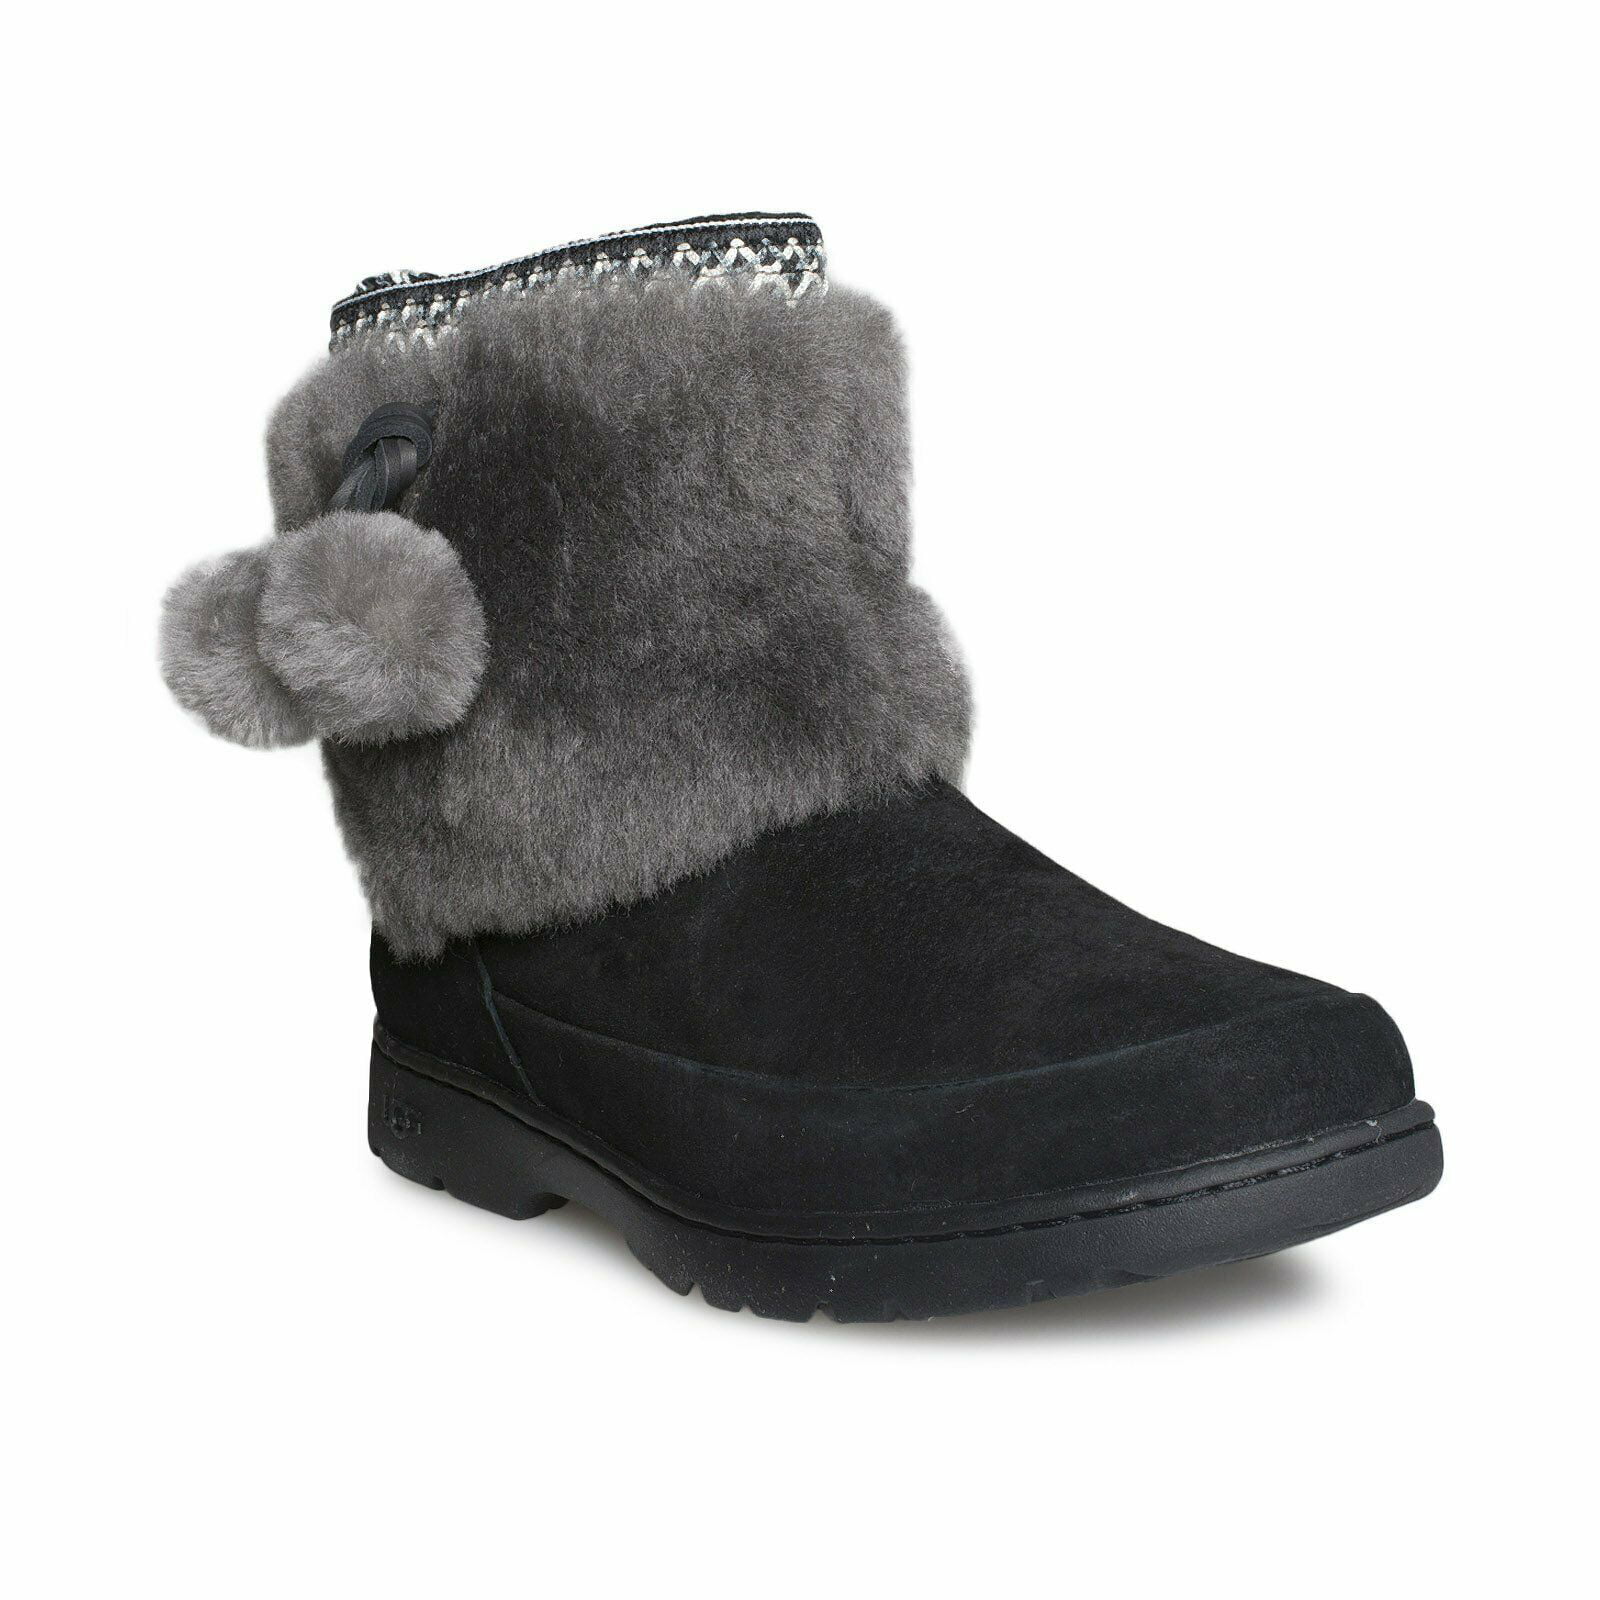 sheepskin boot brand